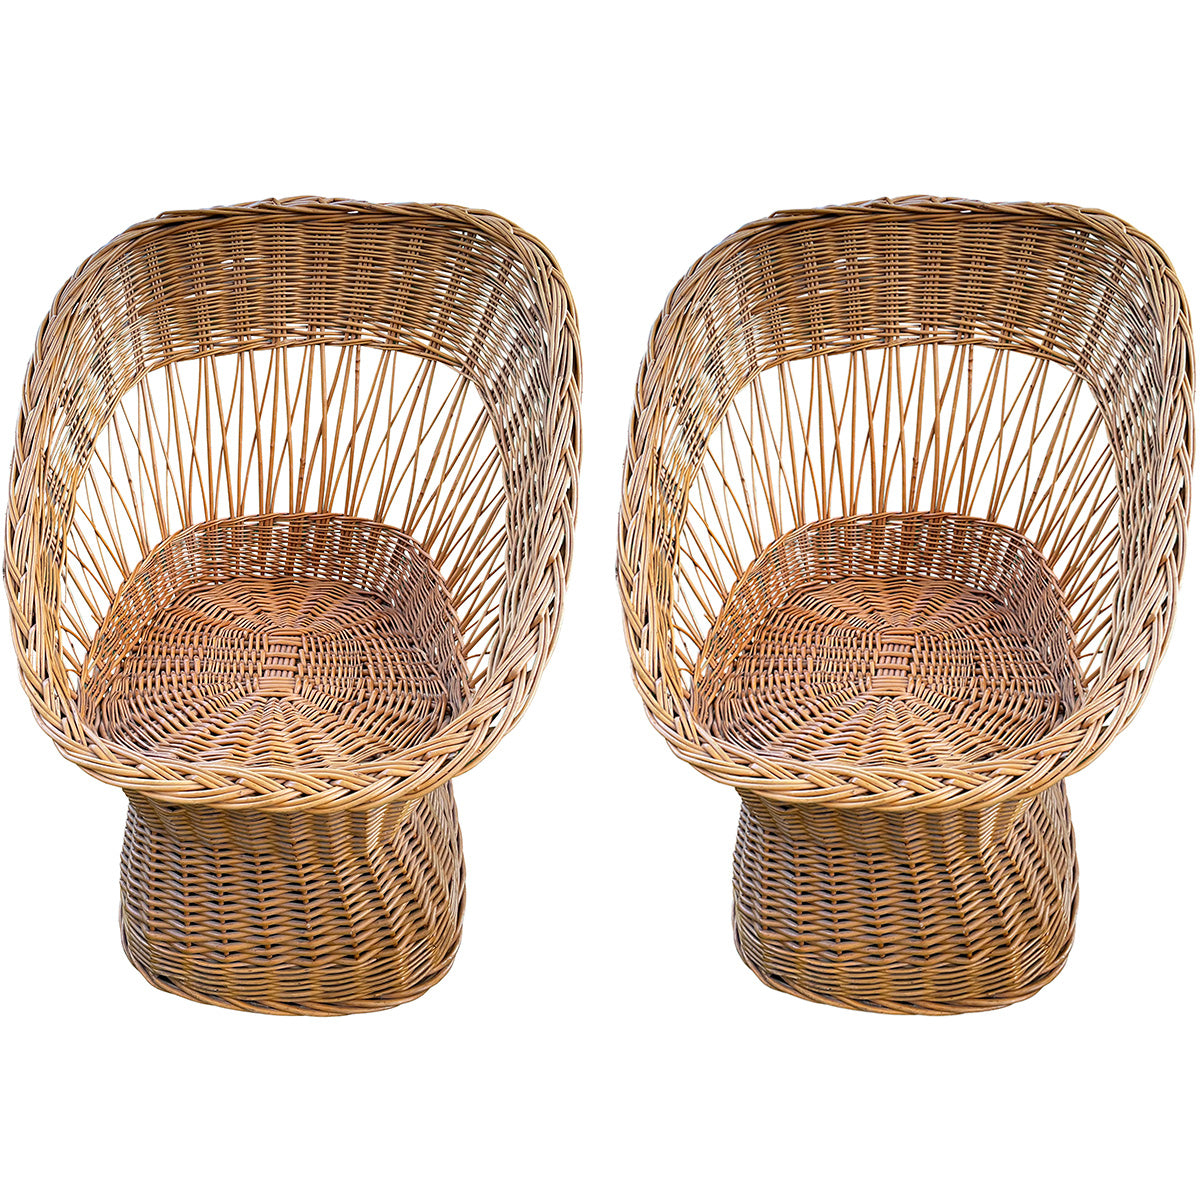 Pair of Wicker "Basket" Chairs